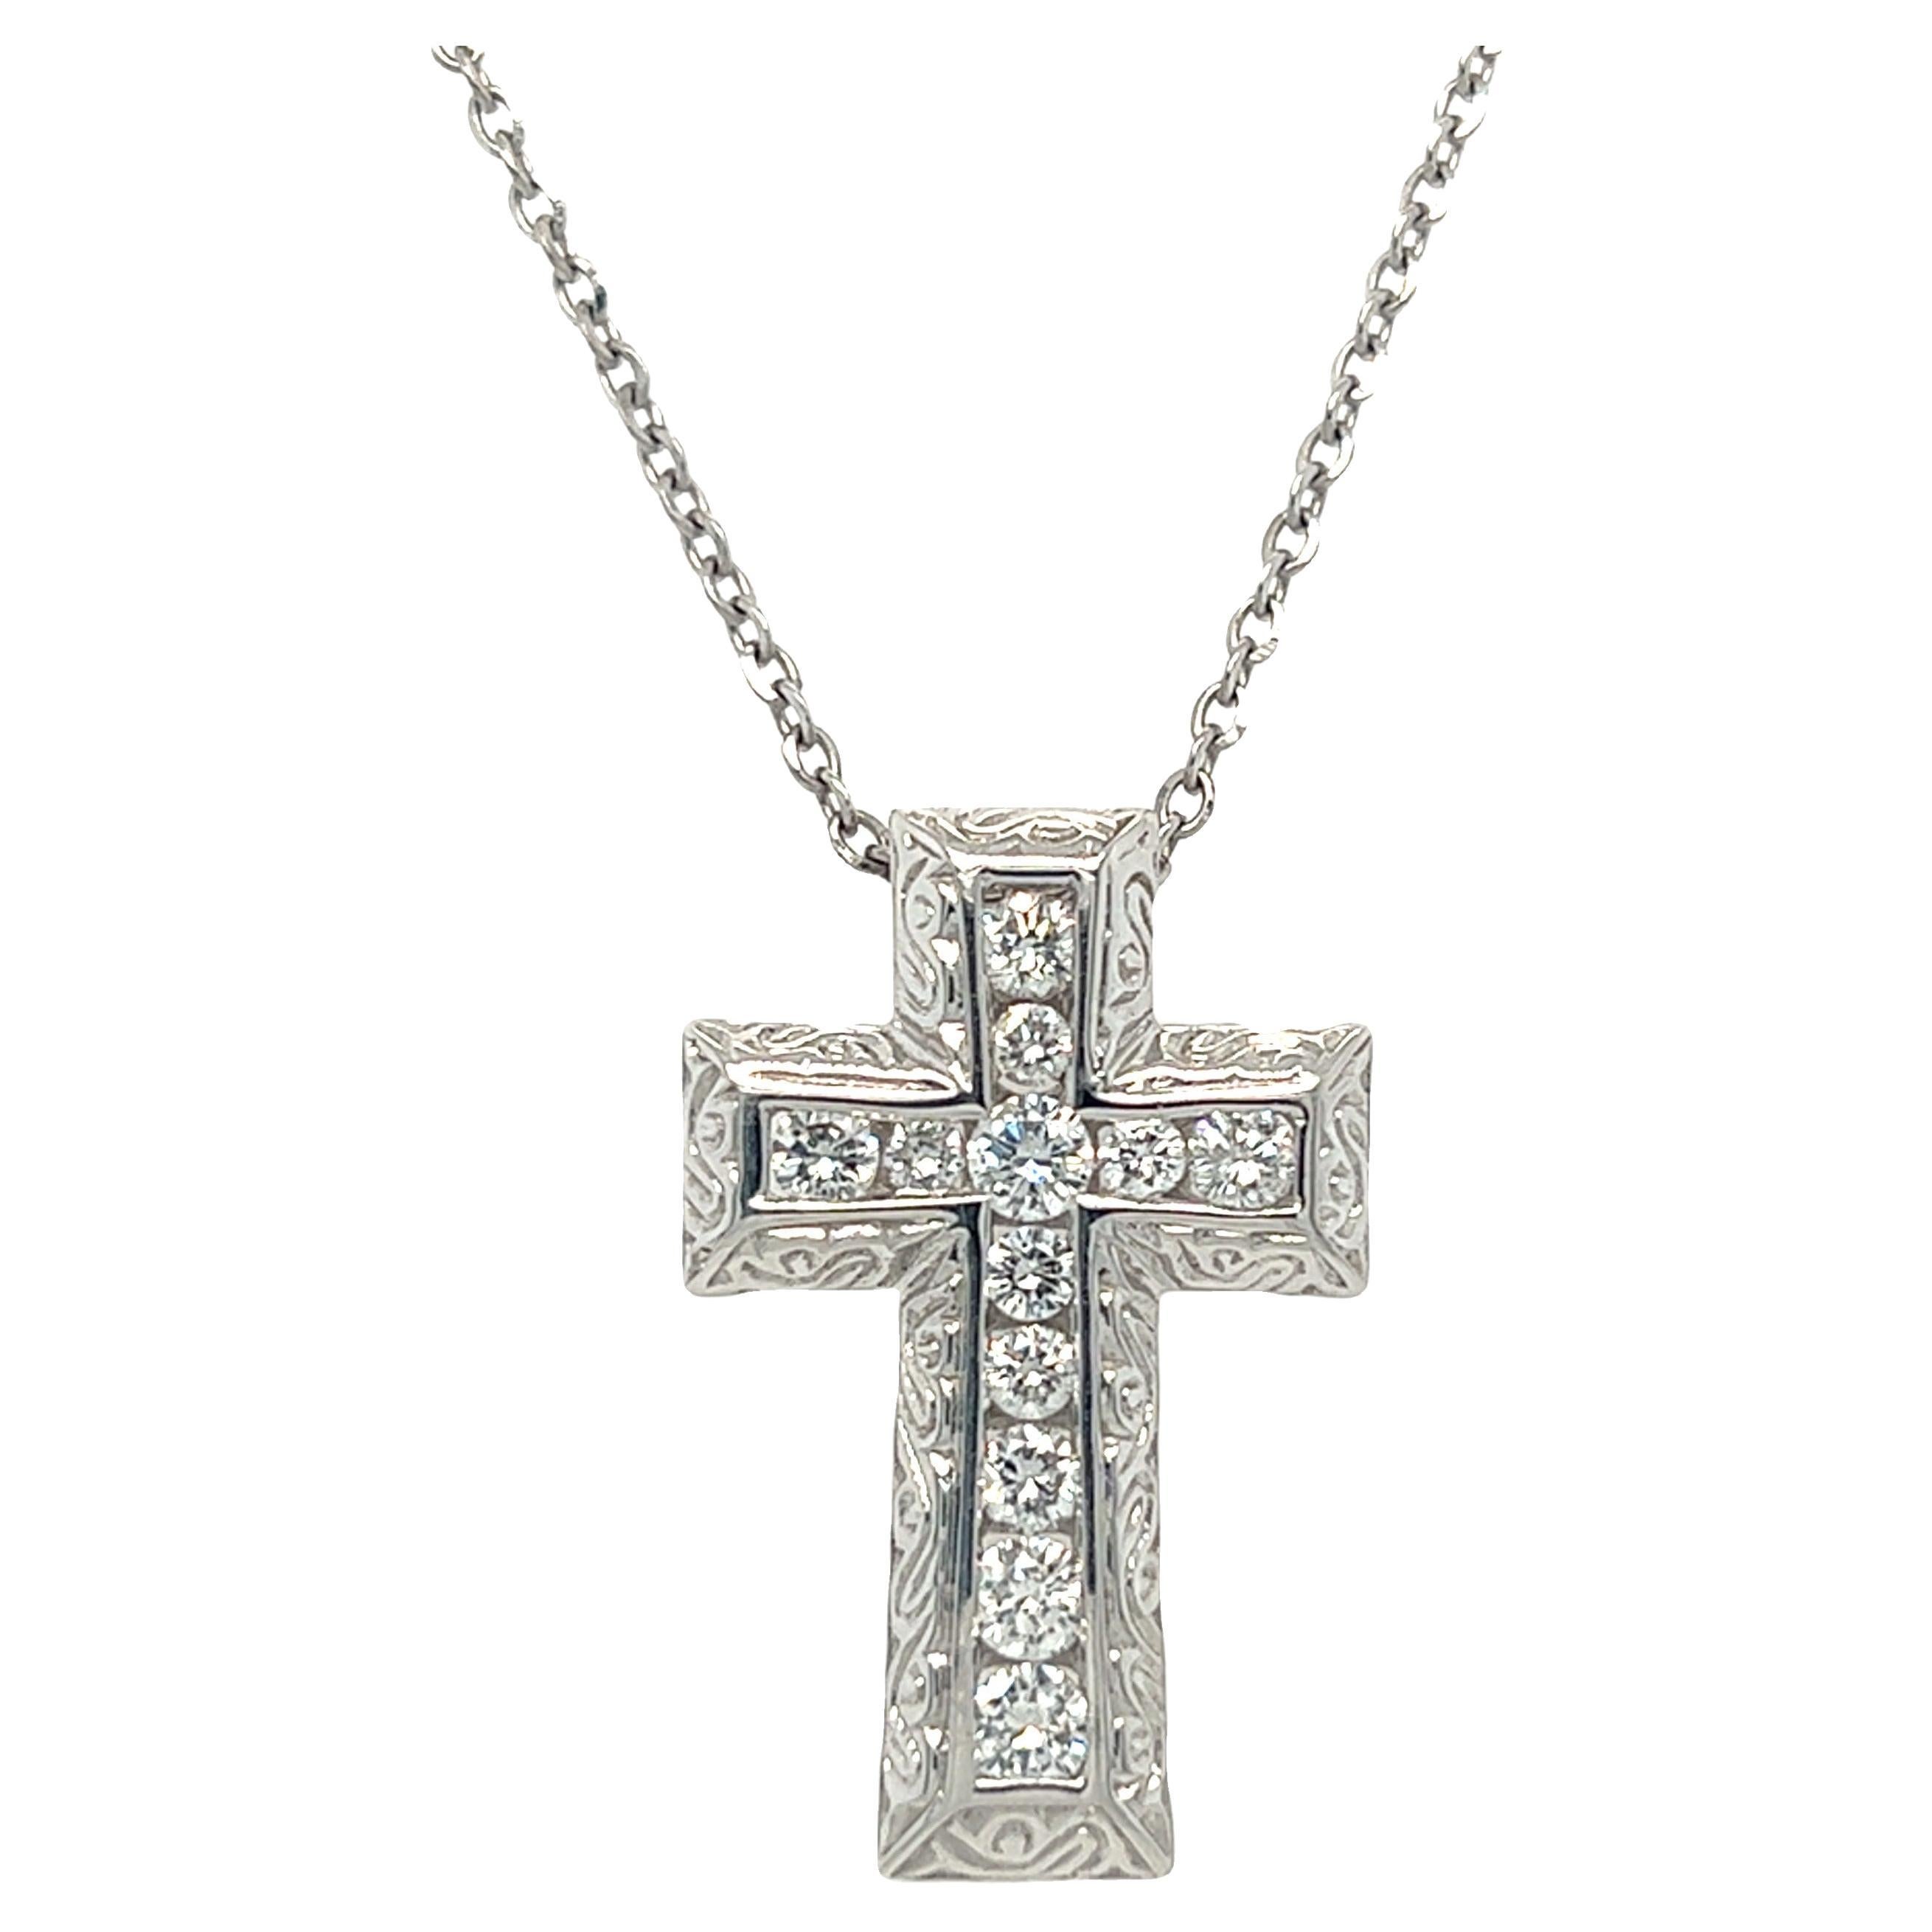 Diamond Cross Pendant Necklace 14K White Gold